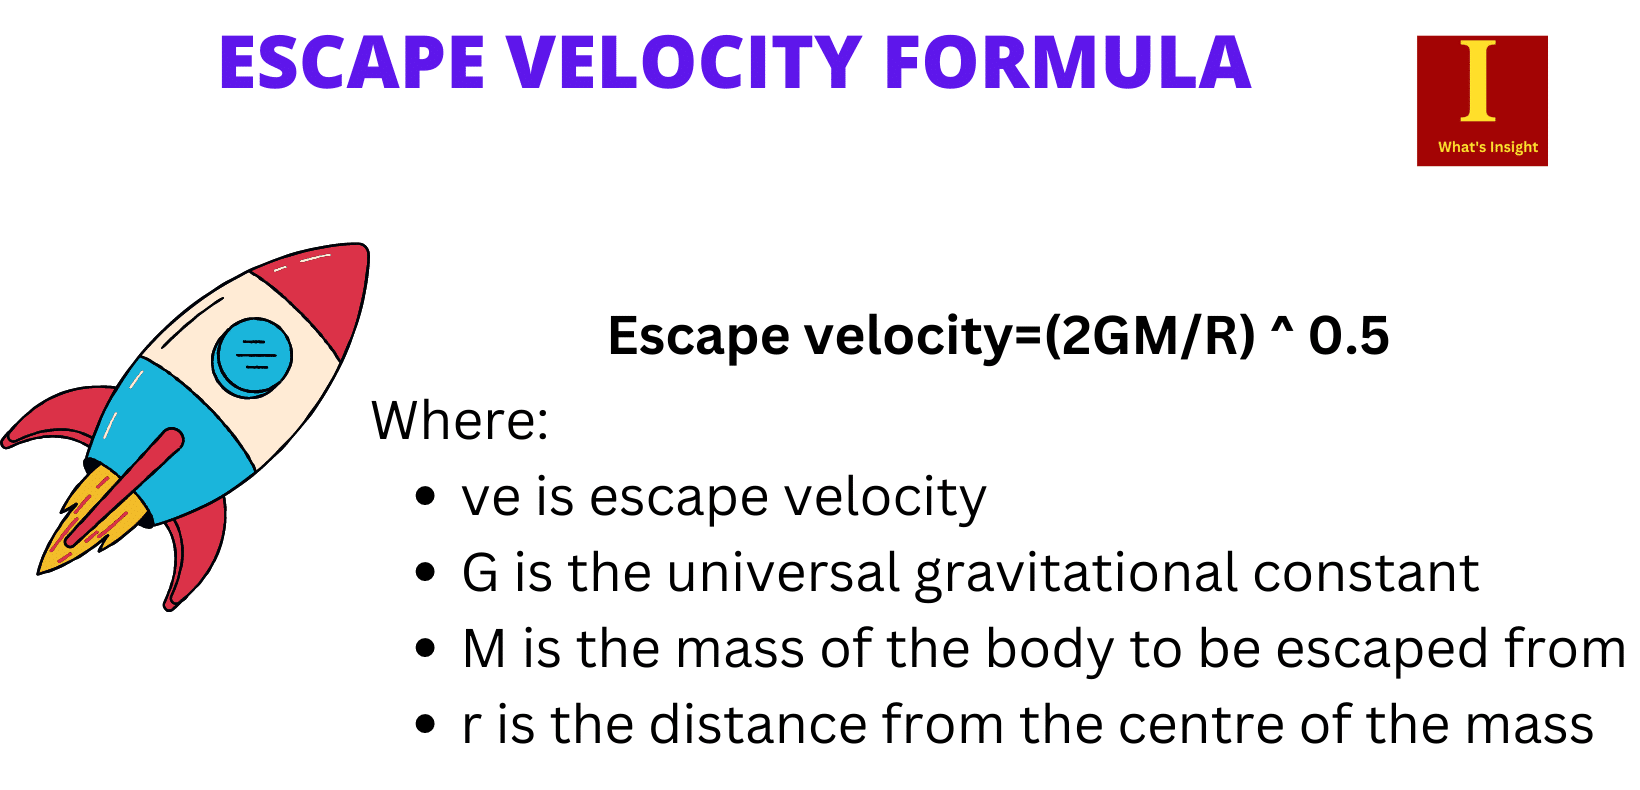 escacpe-velocity-formula